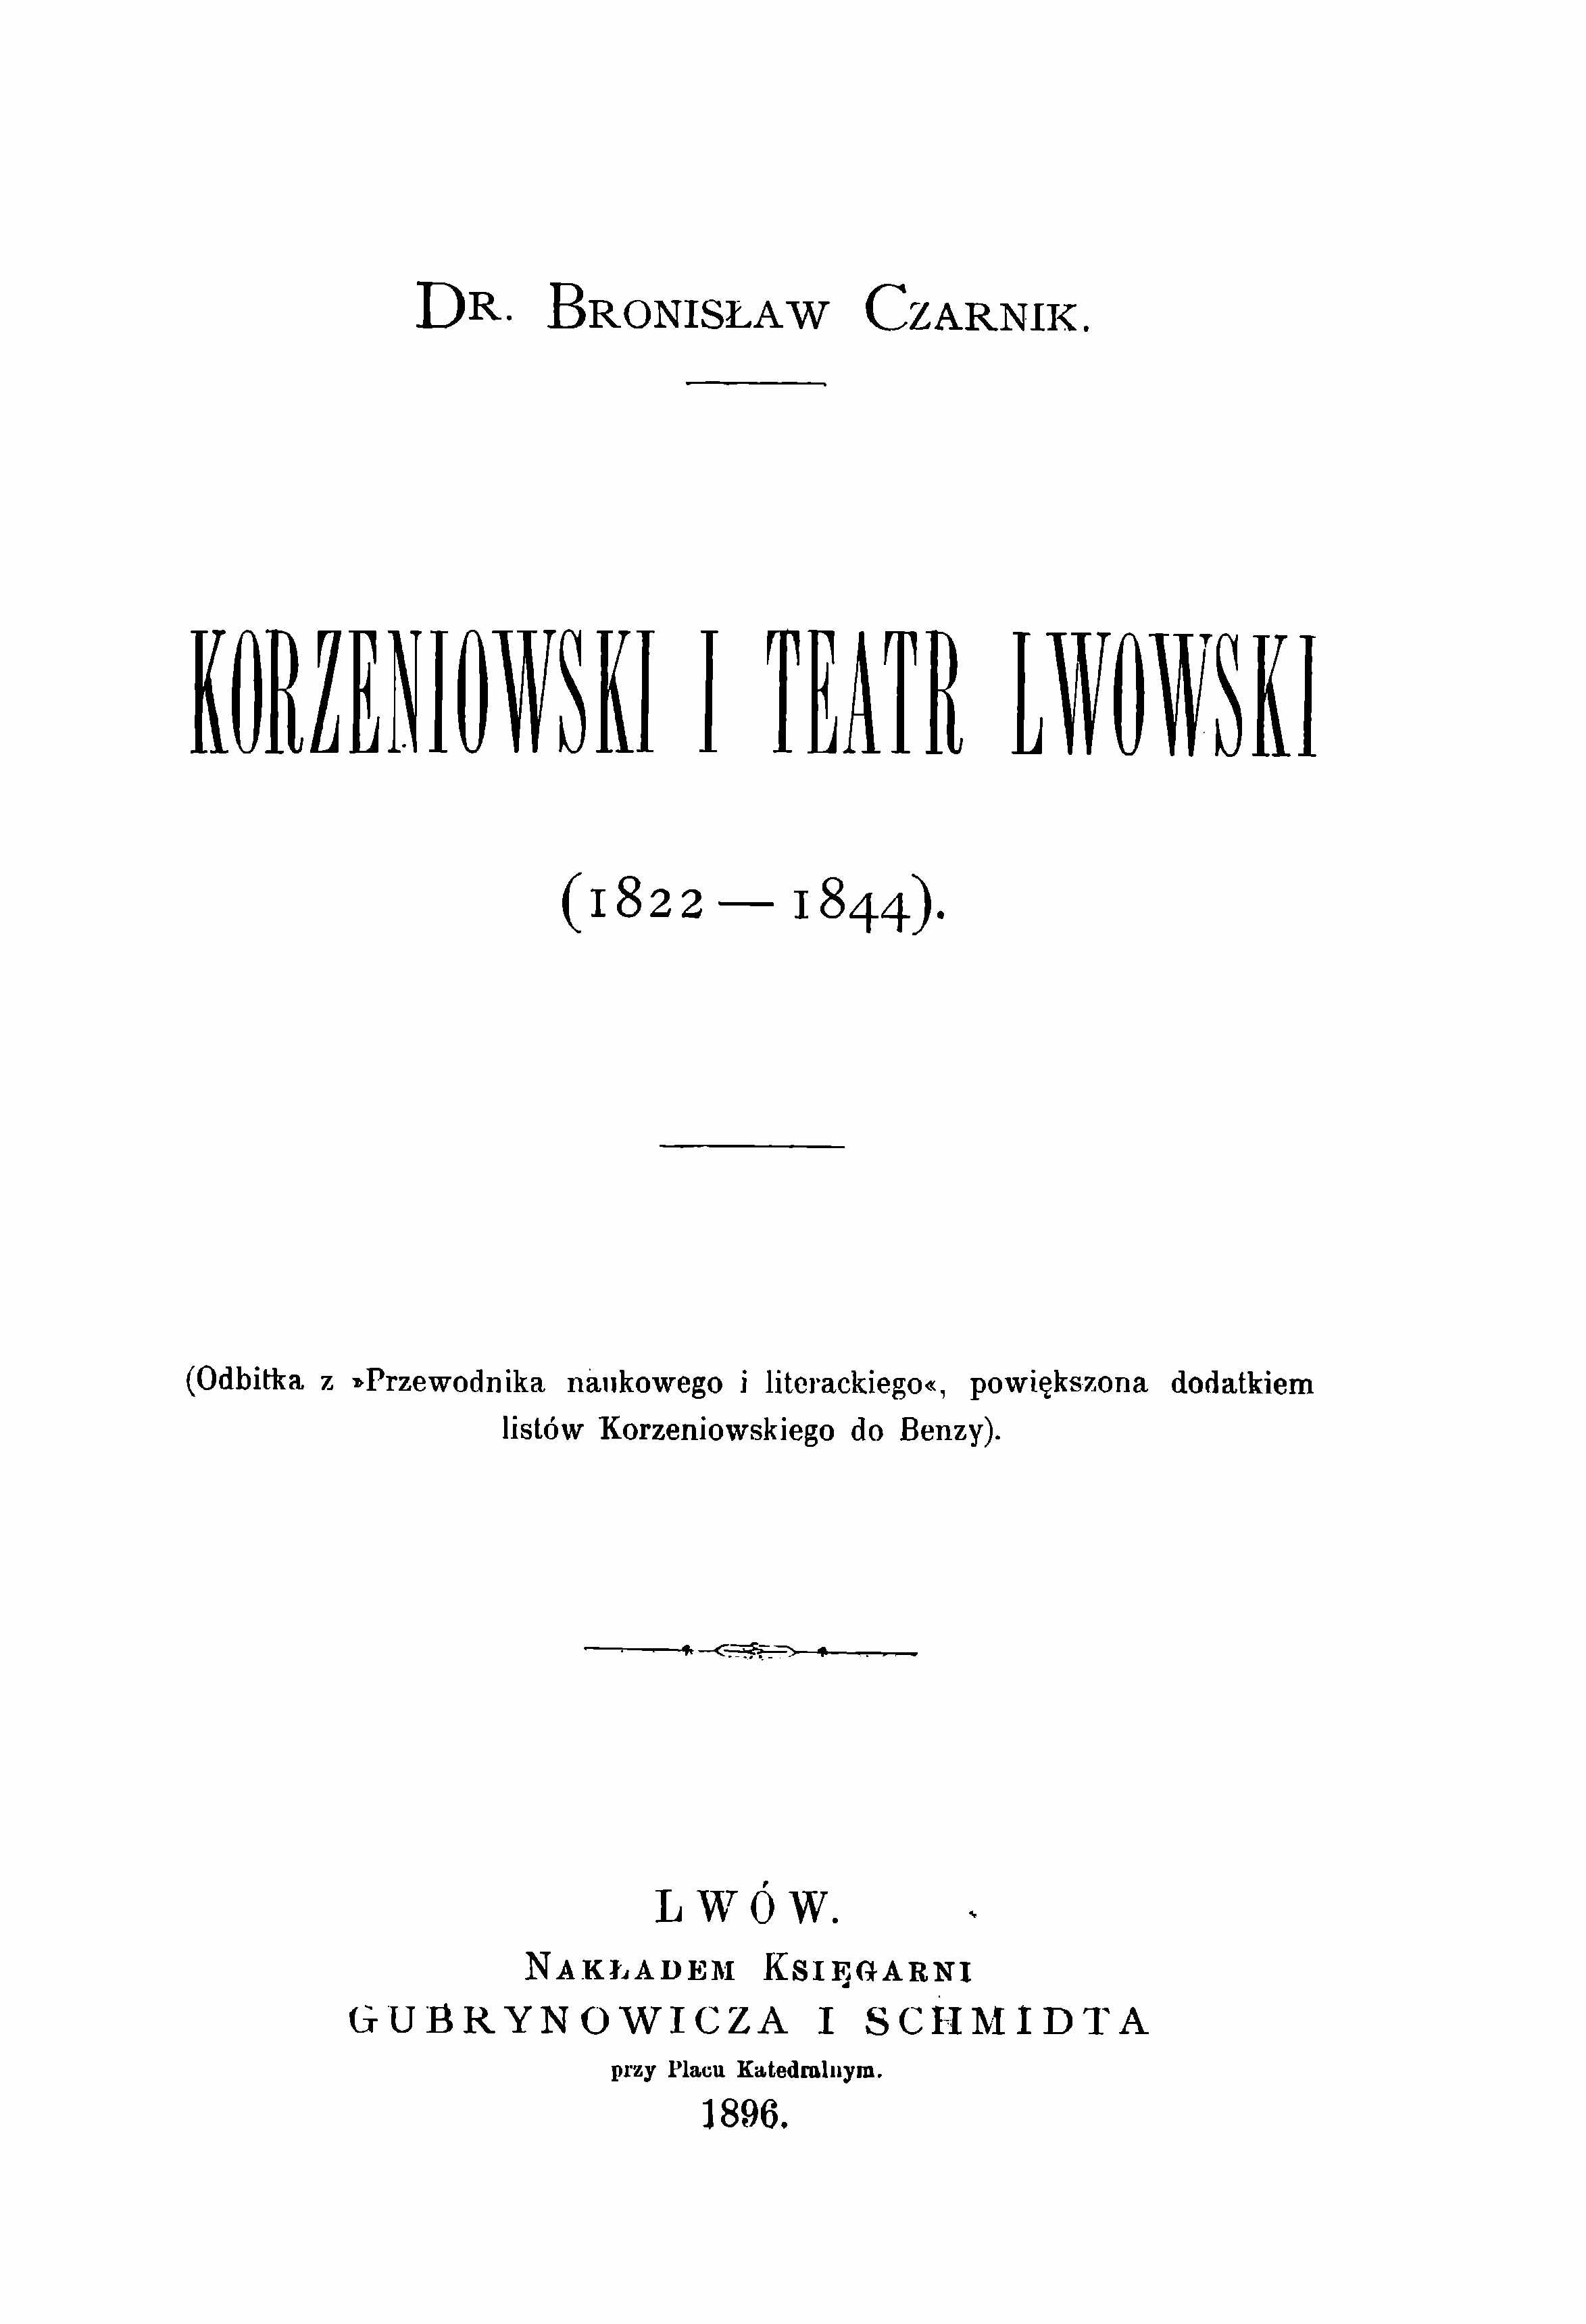 Korzeniowski i teatr lwowski (1822-1844)